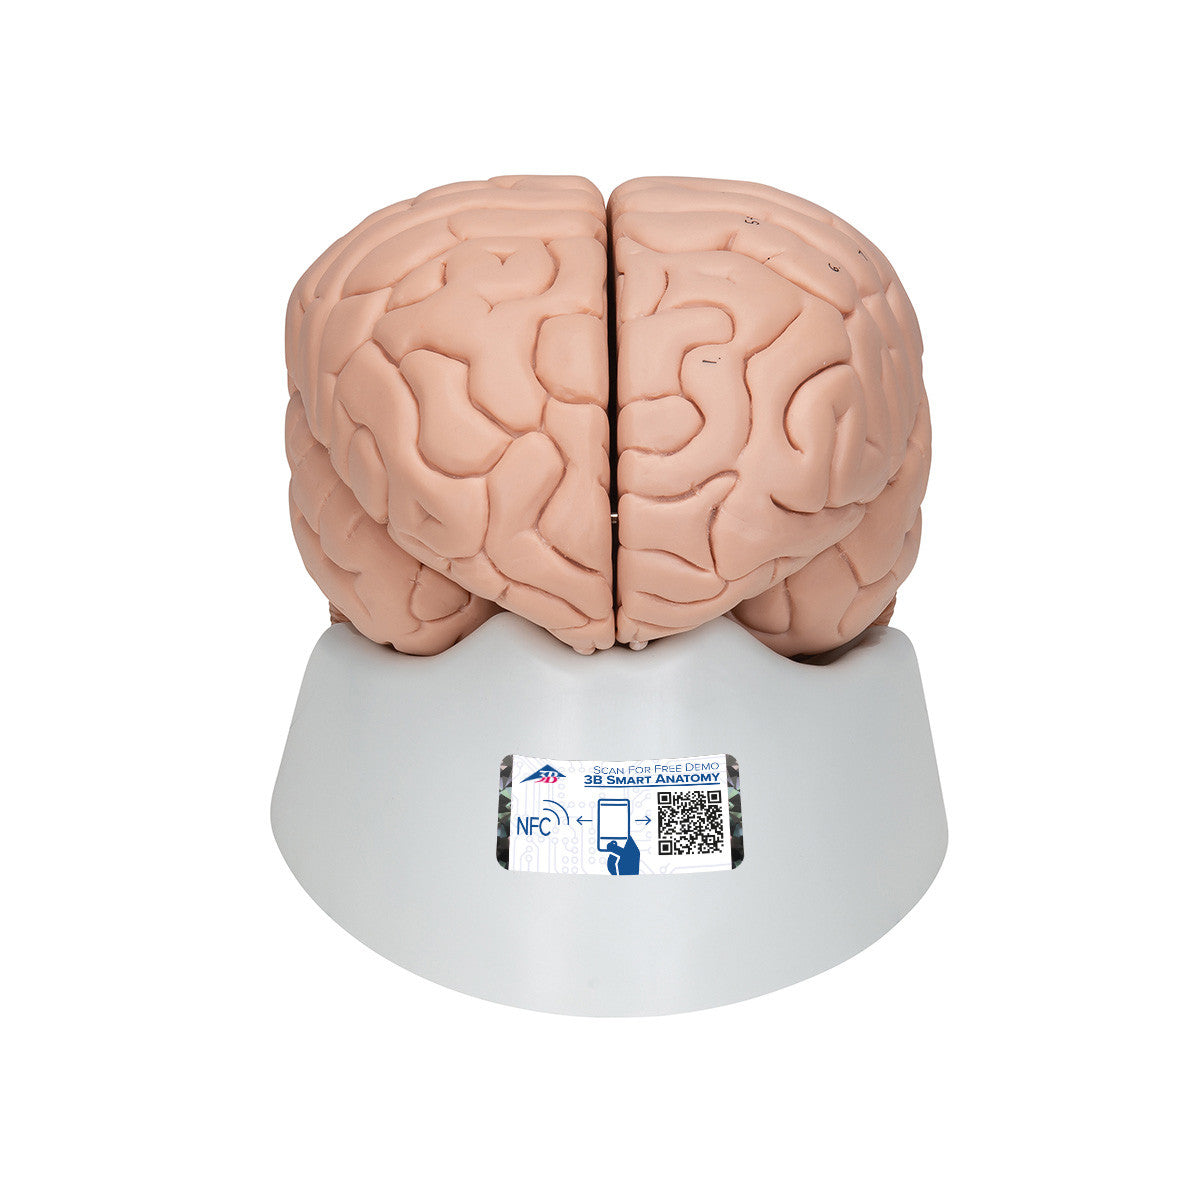 c17_01_1200_1200_human-brain-model-8-part-3b-smart-anatomy__79018.1589753207.1280.1280.jpg